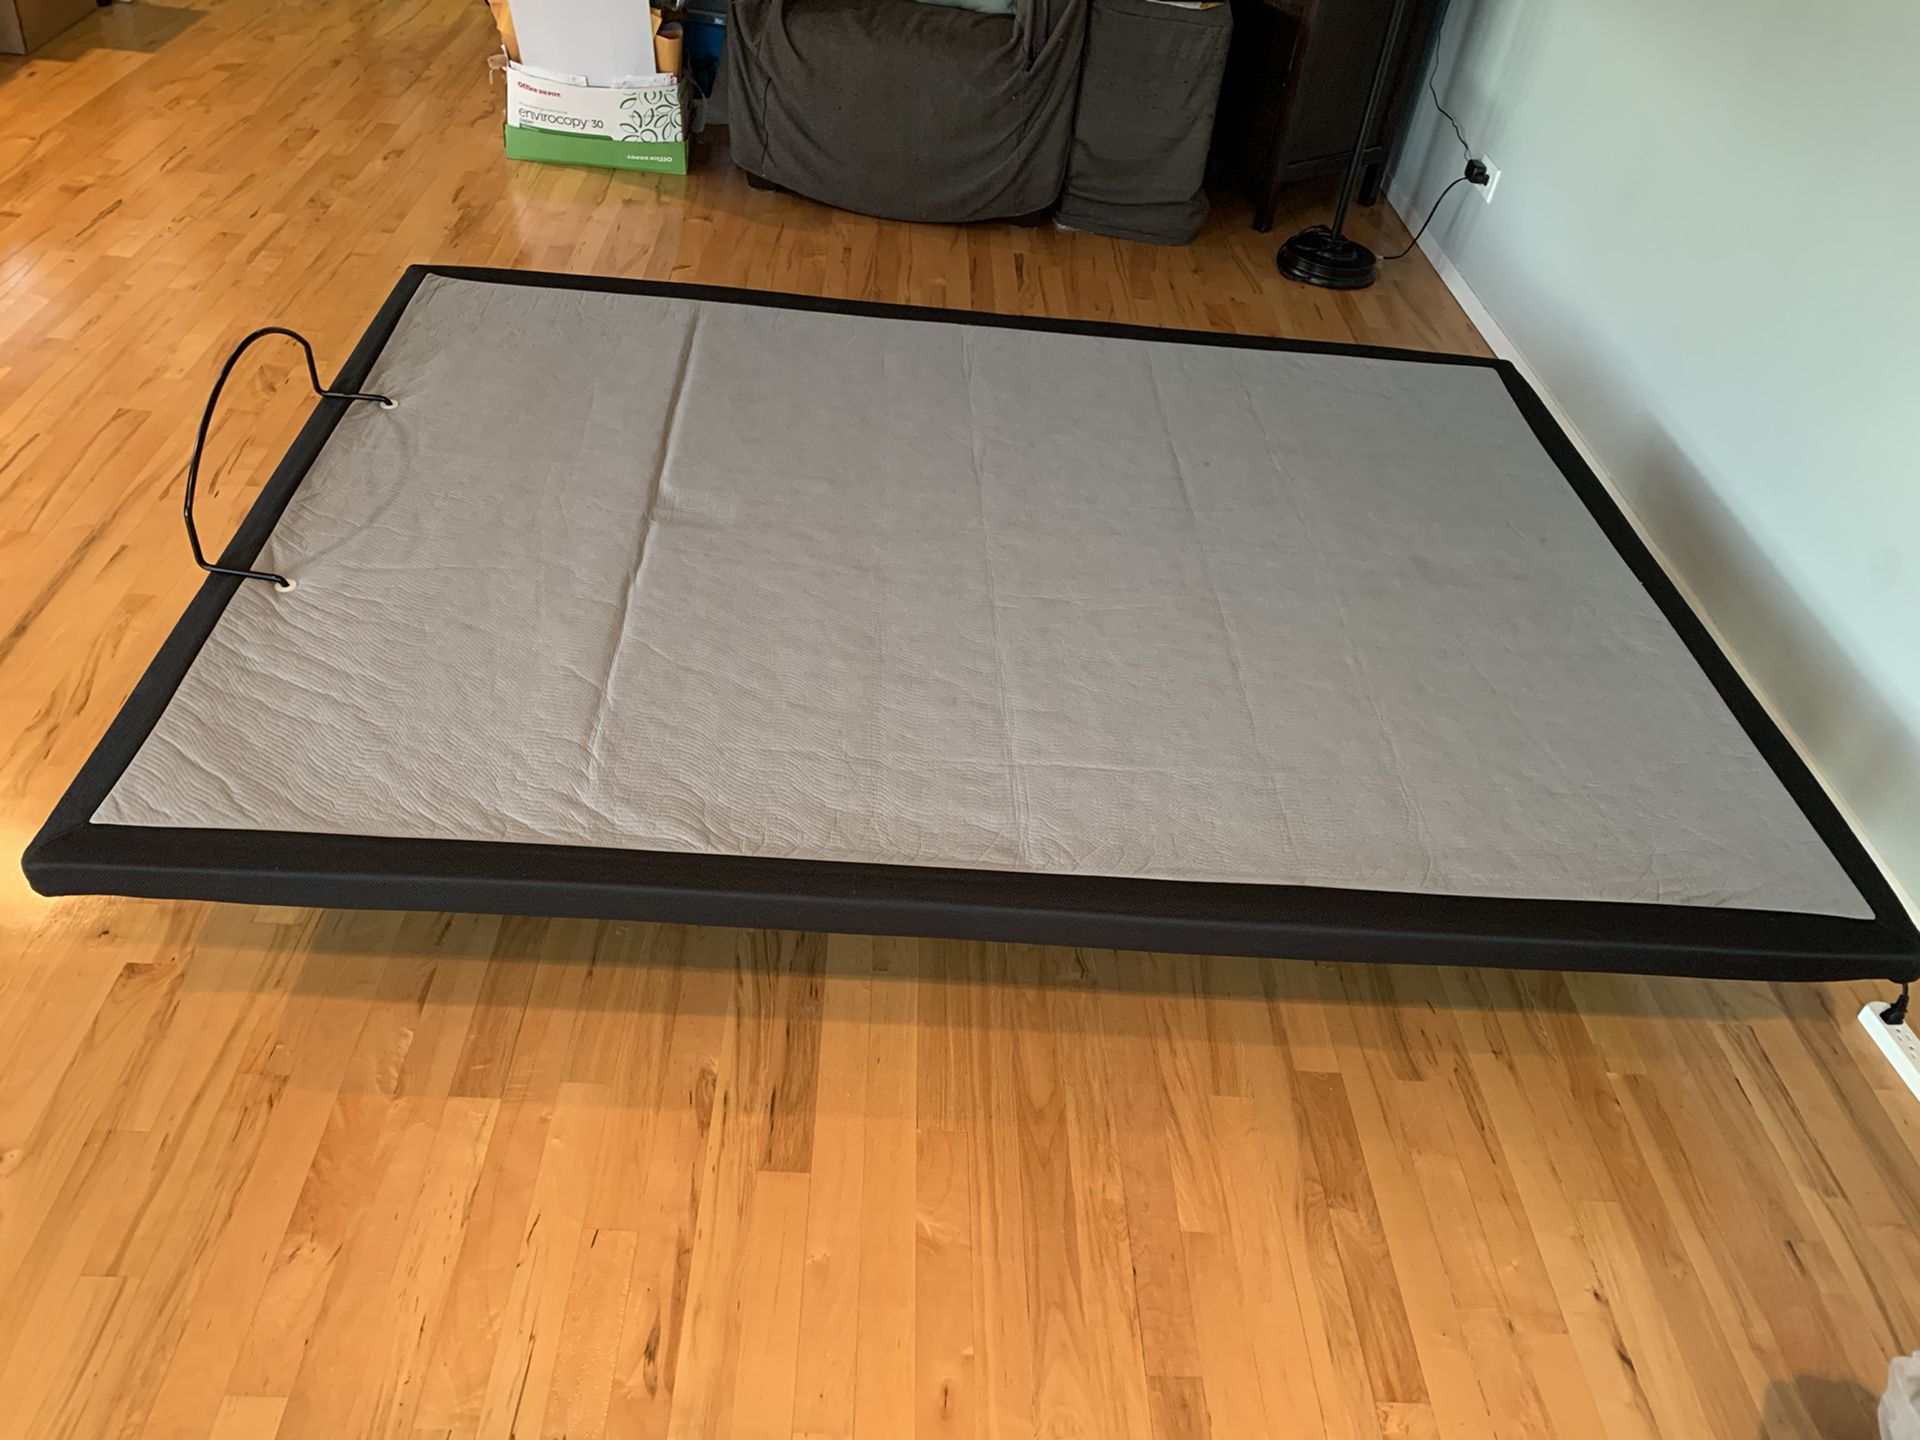 mattress firm adjustable base owners manu